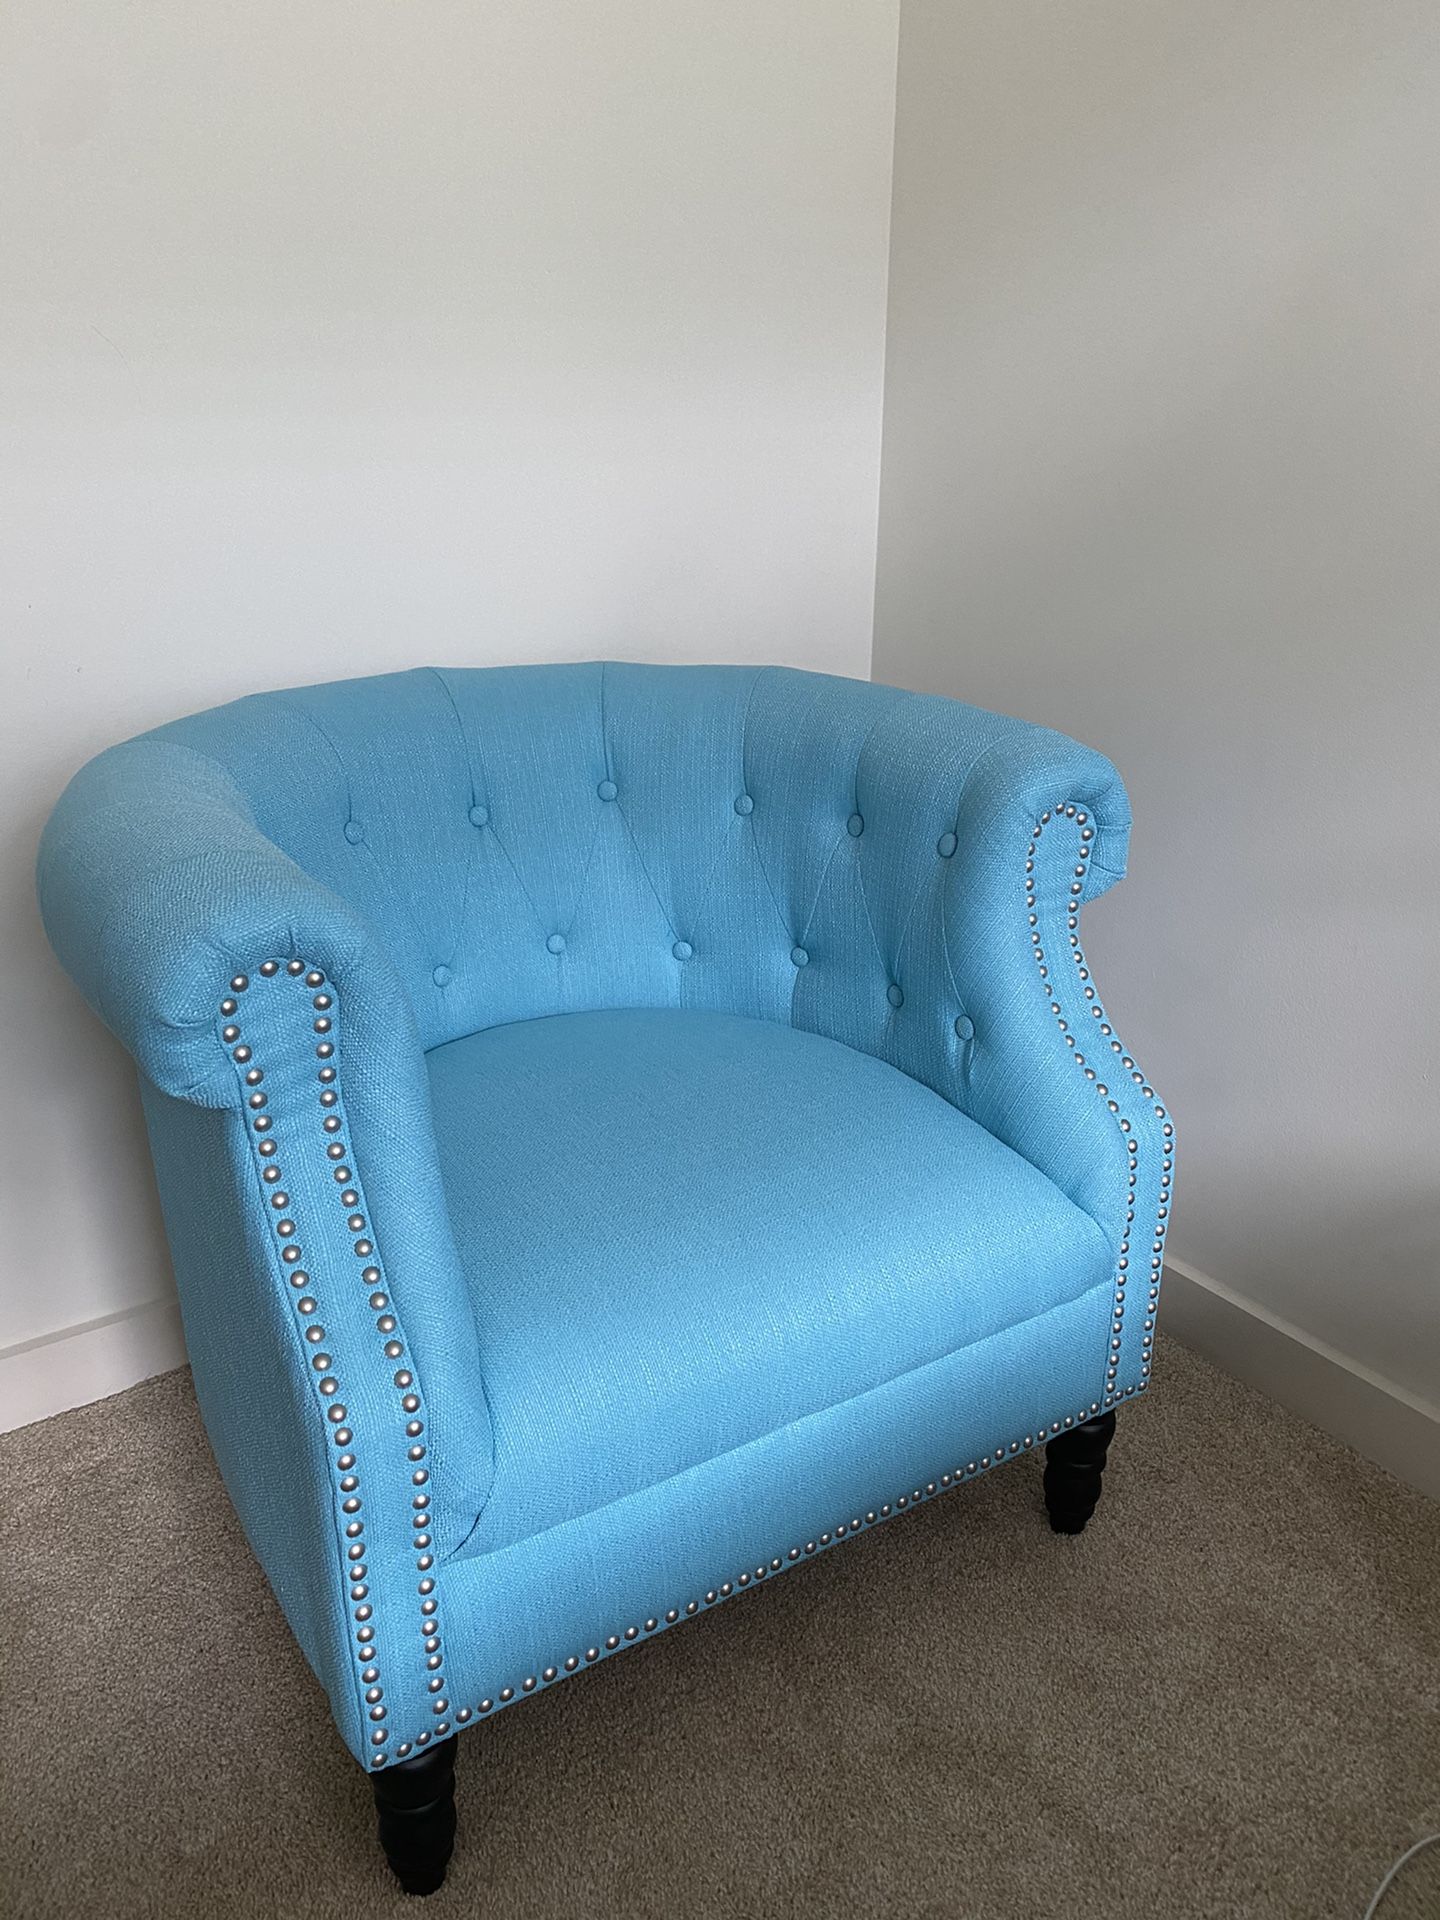 Brand new armchair